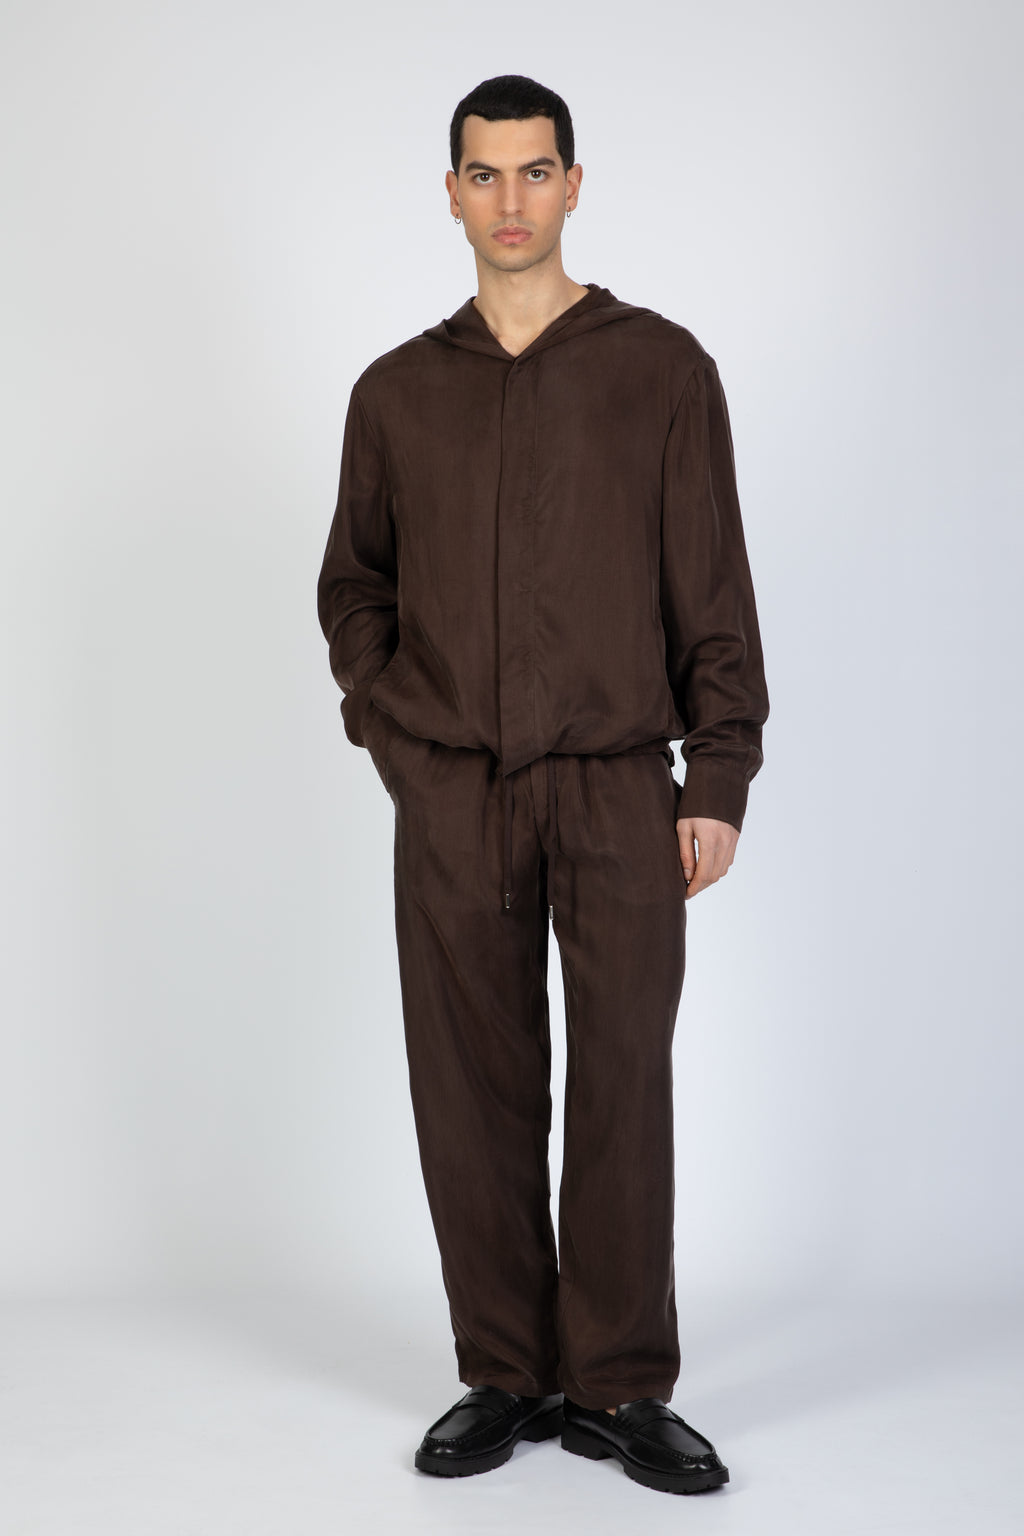 alt-image__Brown-cupro-loose-fit-drawstring-pant---Pajama-Otaru-Trousers-